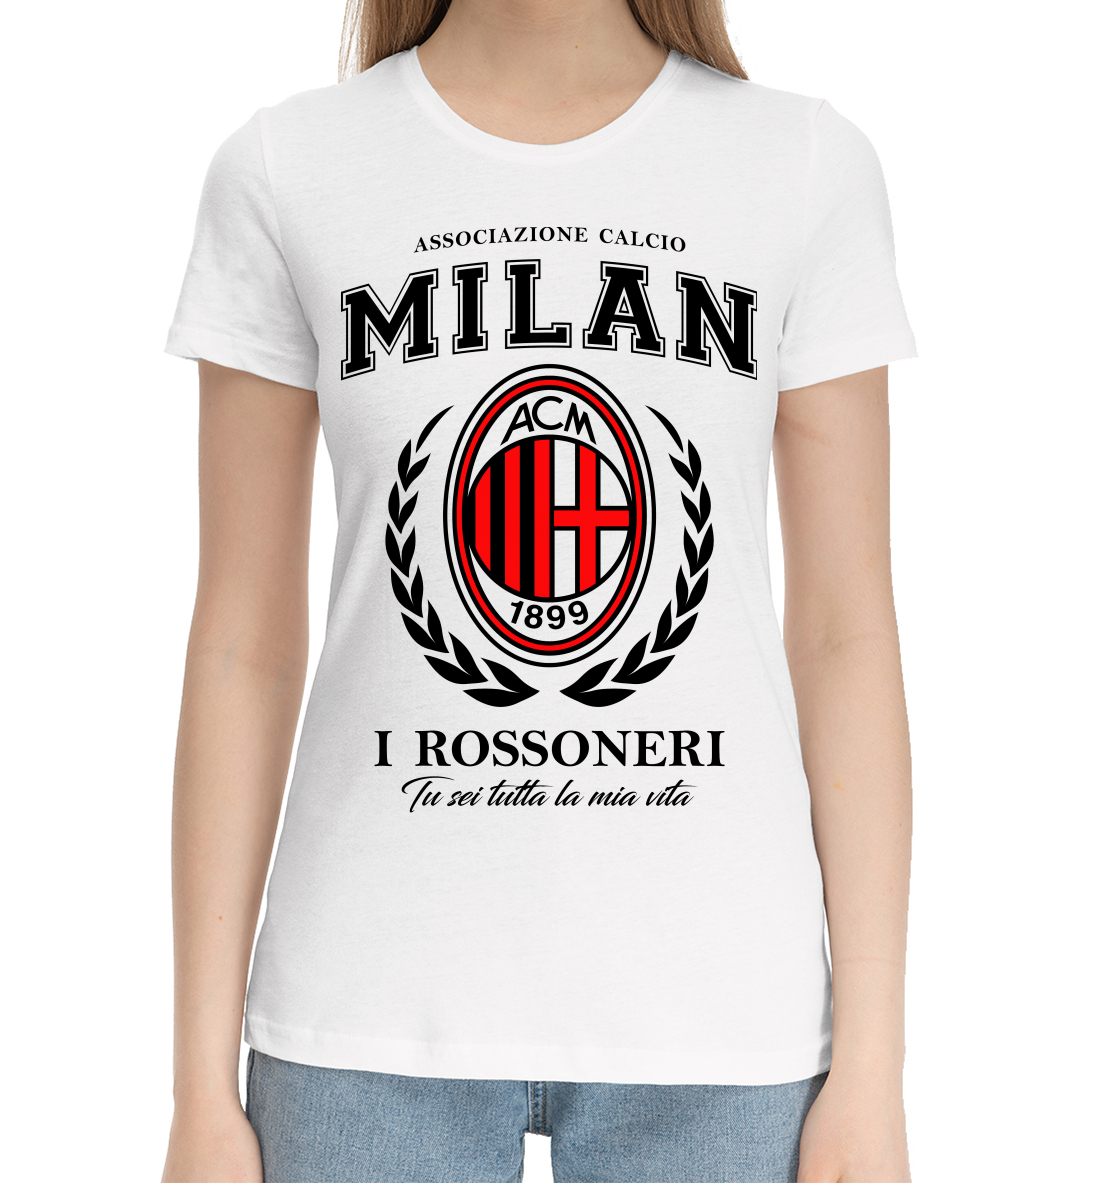 Женская Хлопковая футболка Милан, артикул ACM-639533-hfu-1mp